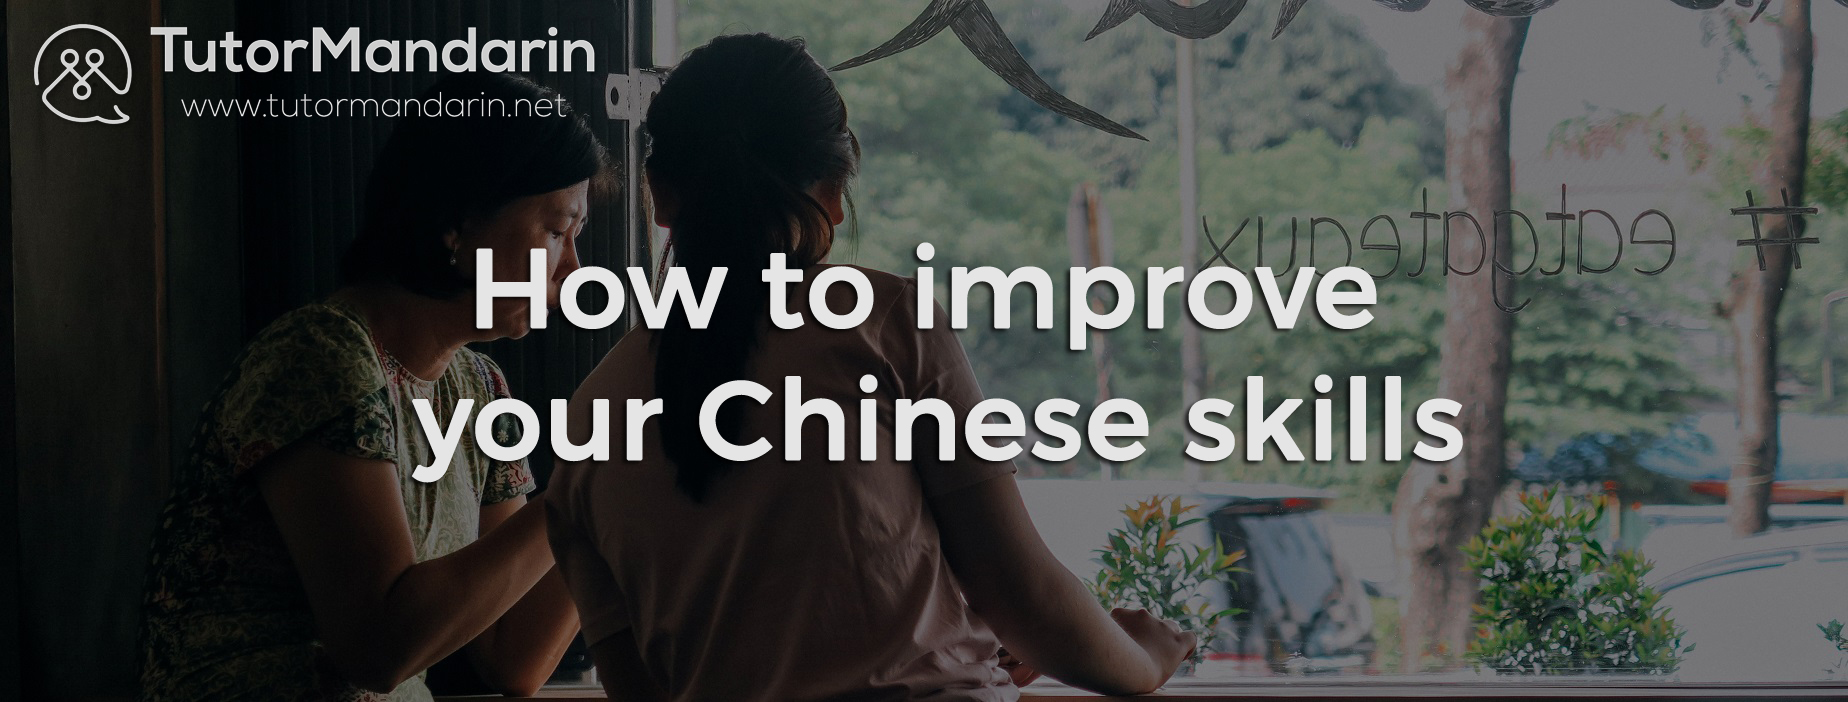 TutorMandarin, Blog, improve skills, learning mandarin, chinese